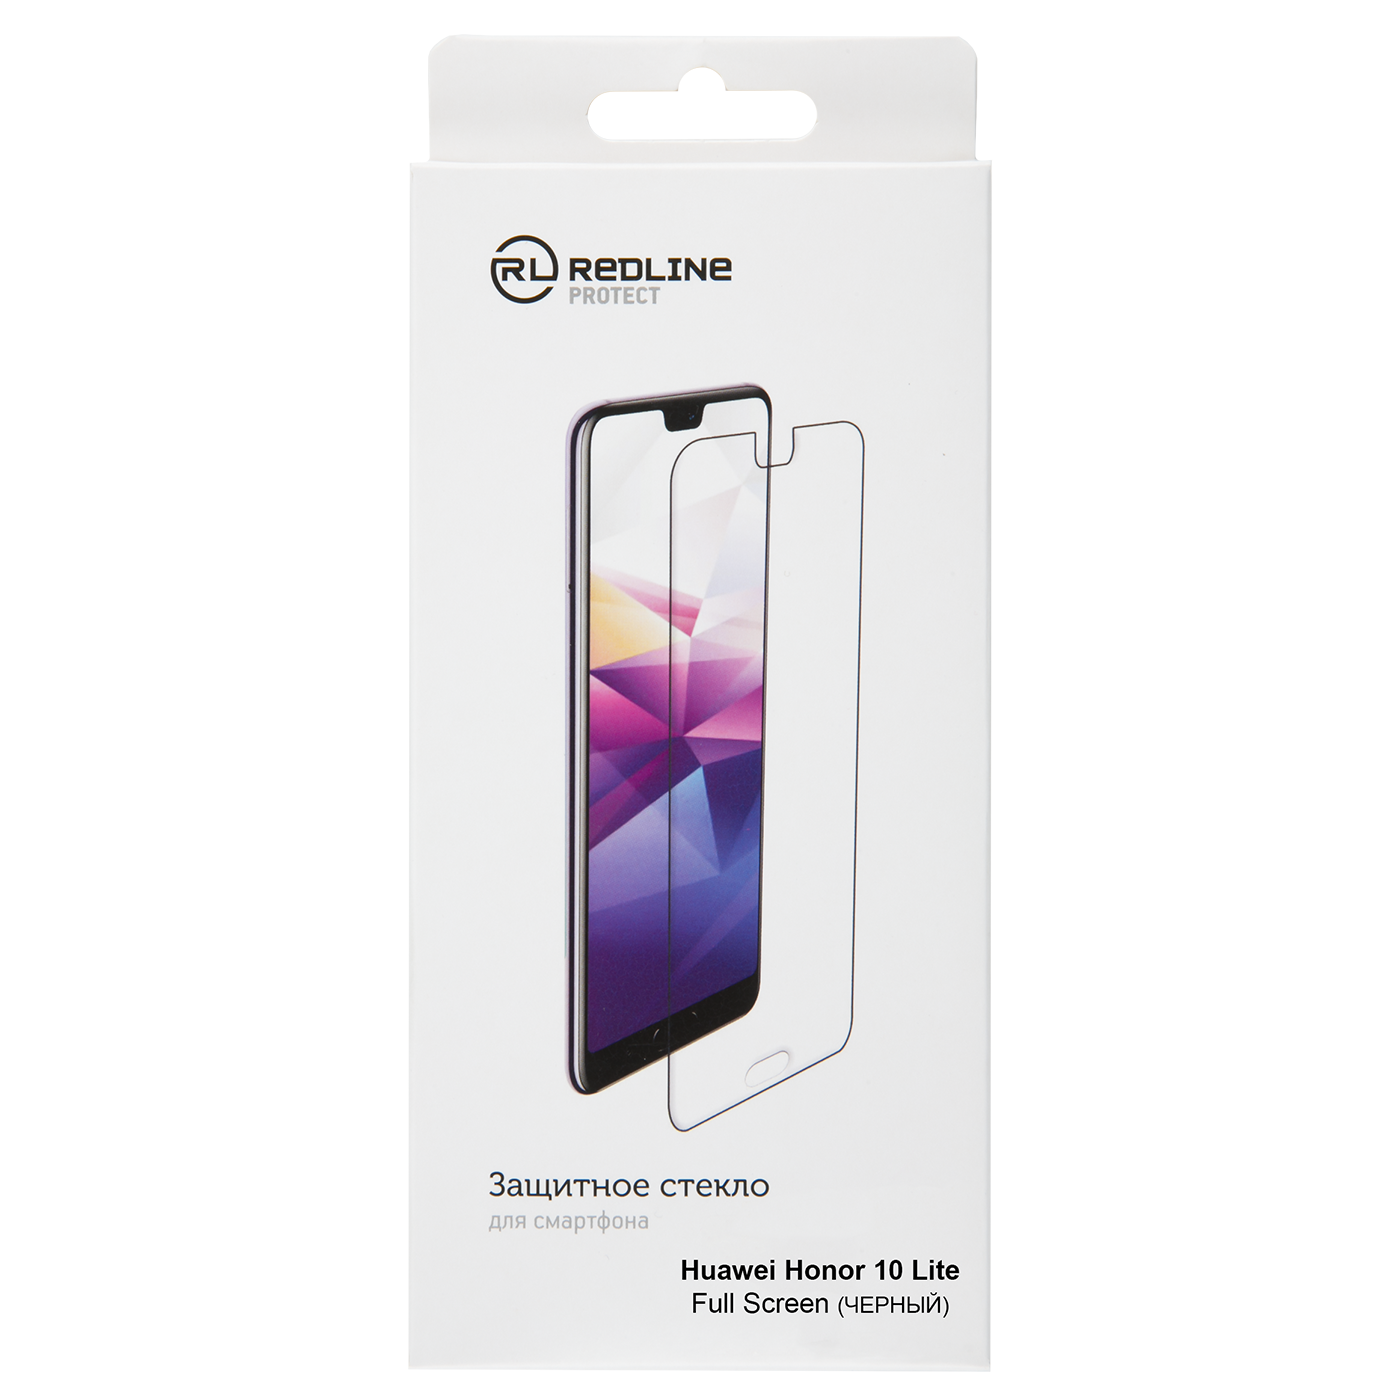 Защитный экран Huawei Honor 10 lite Full screen tempered glass